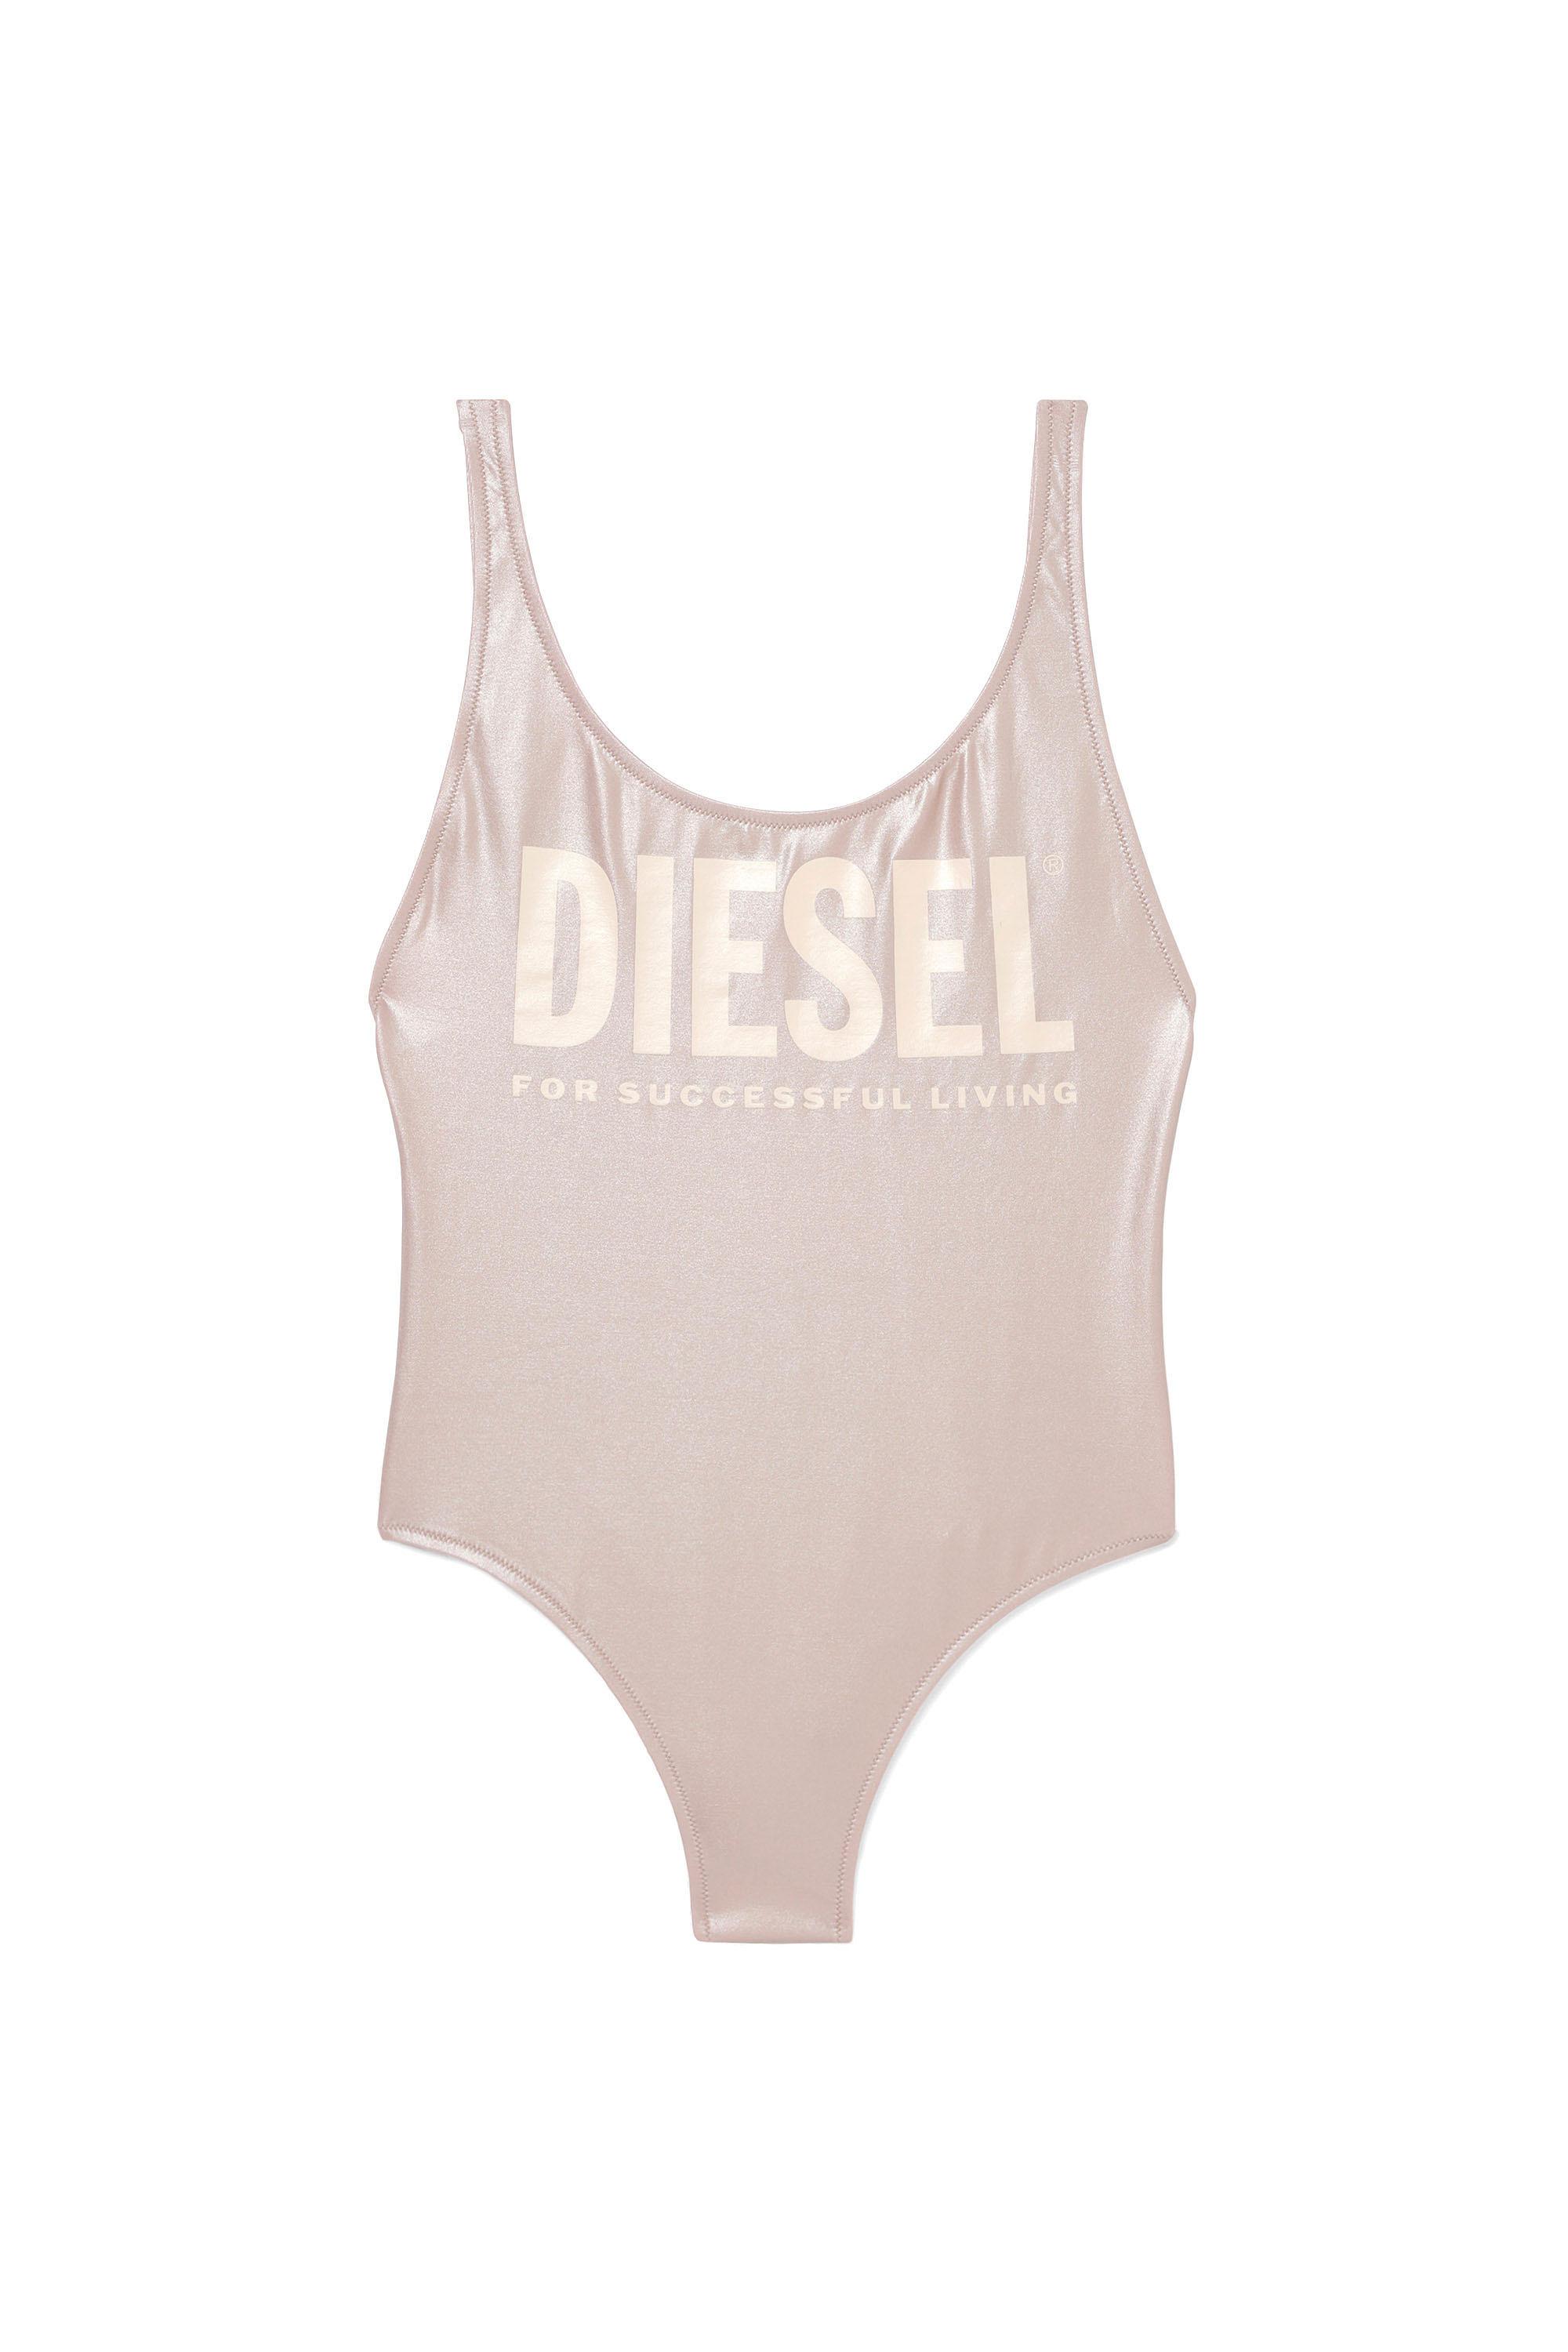 Diesel - BFSW-LIA, Pink - Image 3